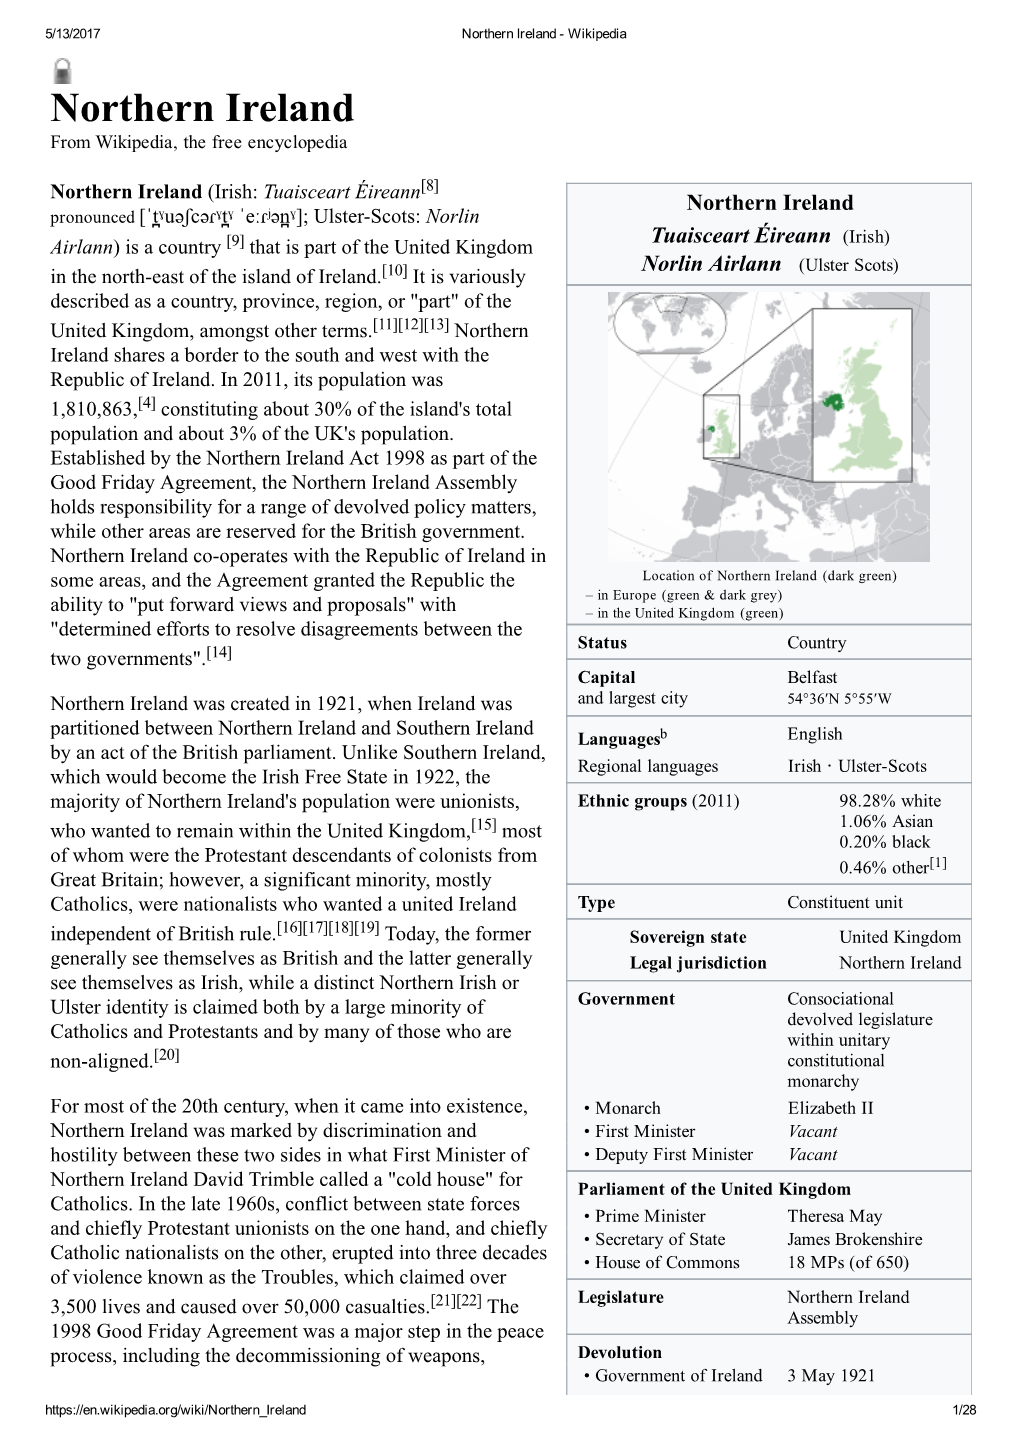 Northern Ireland. Wikipedia, the Free Encyclopedia